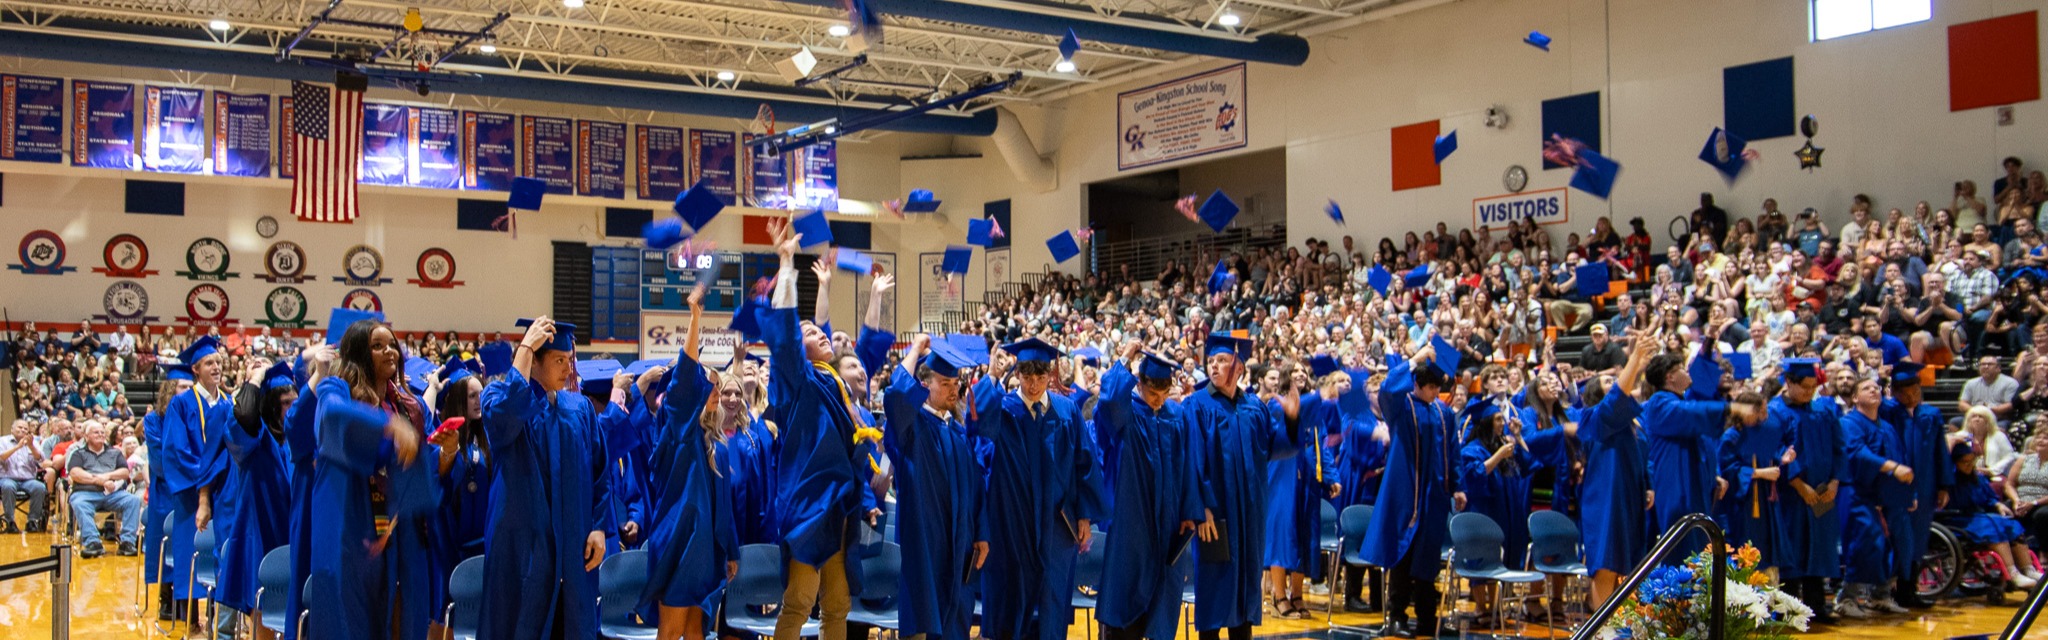 image of students at graduation